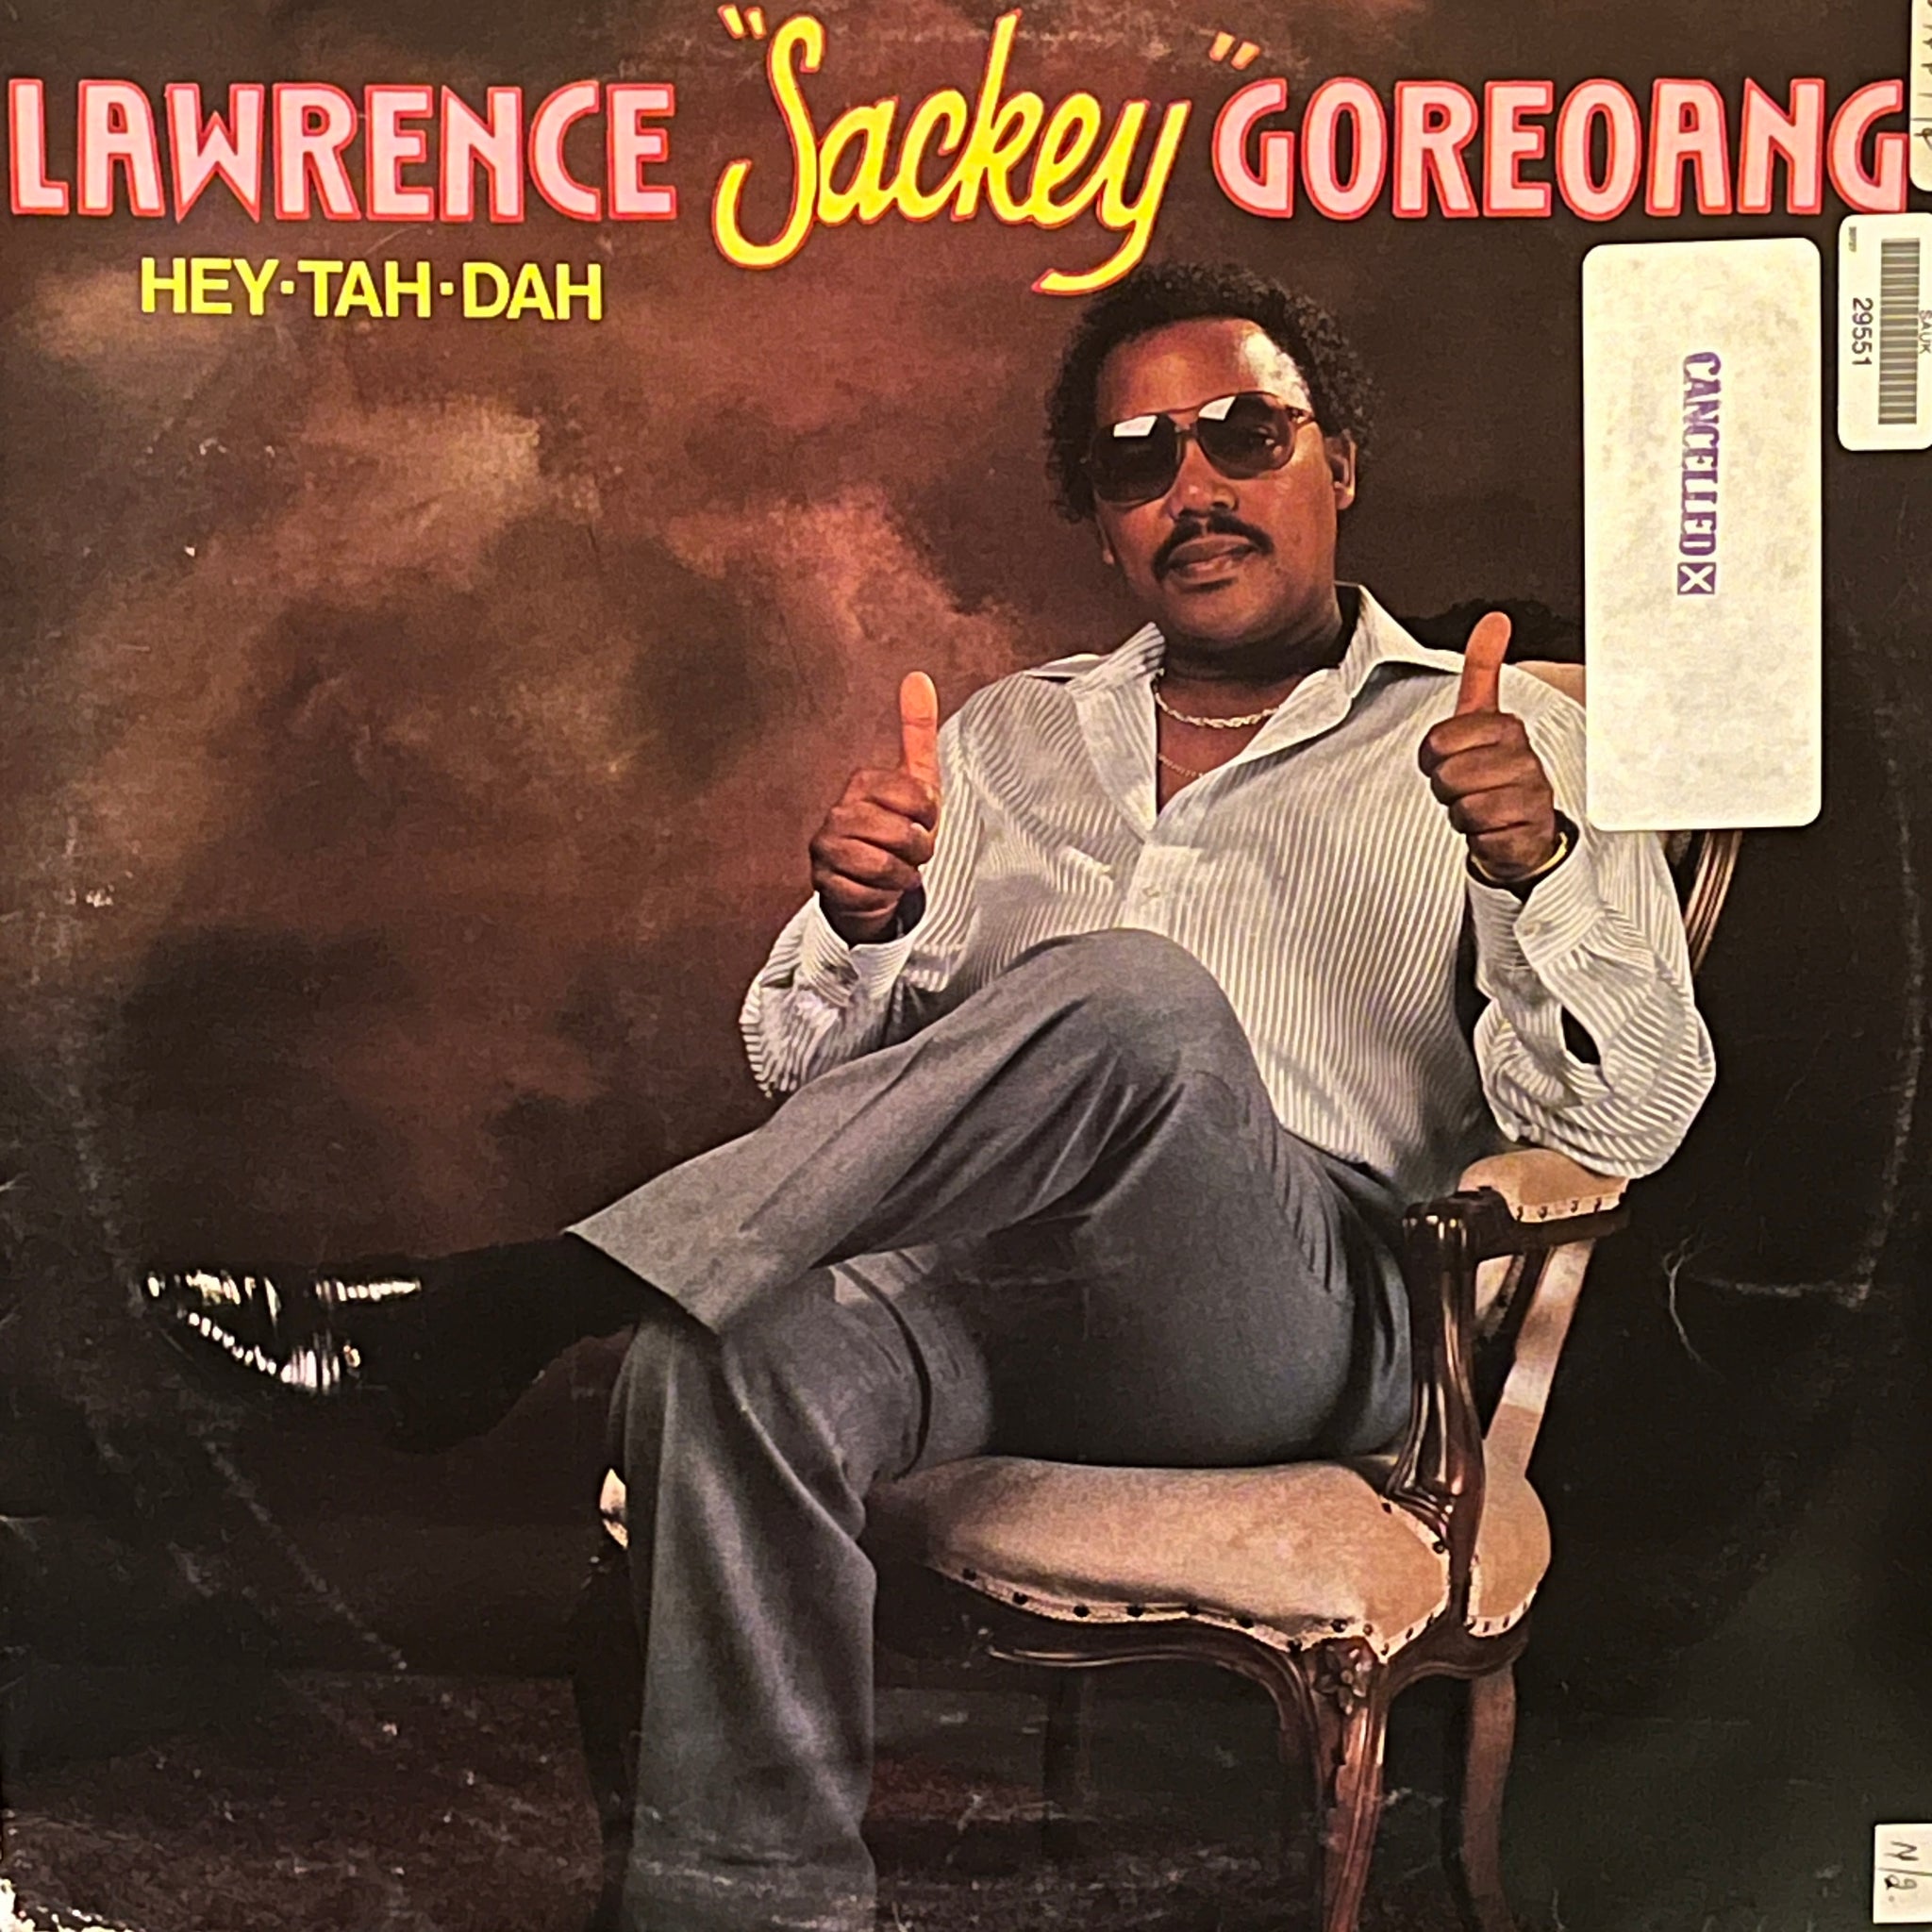 Lawrence "Sackey" Goreoang ‎– Hey-Tah-Dah